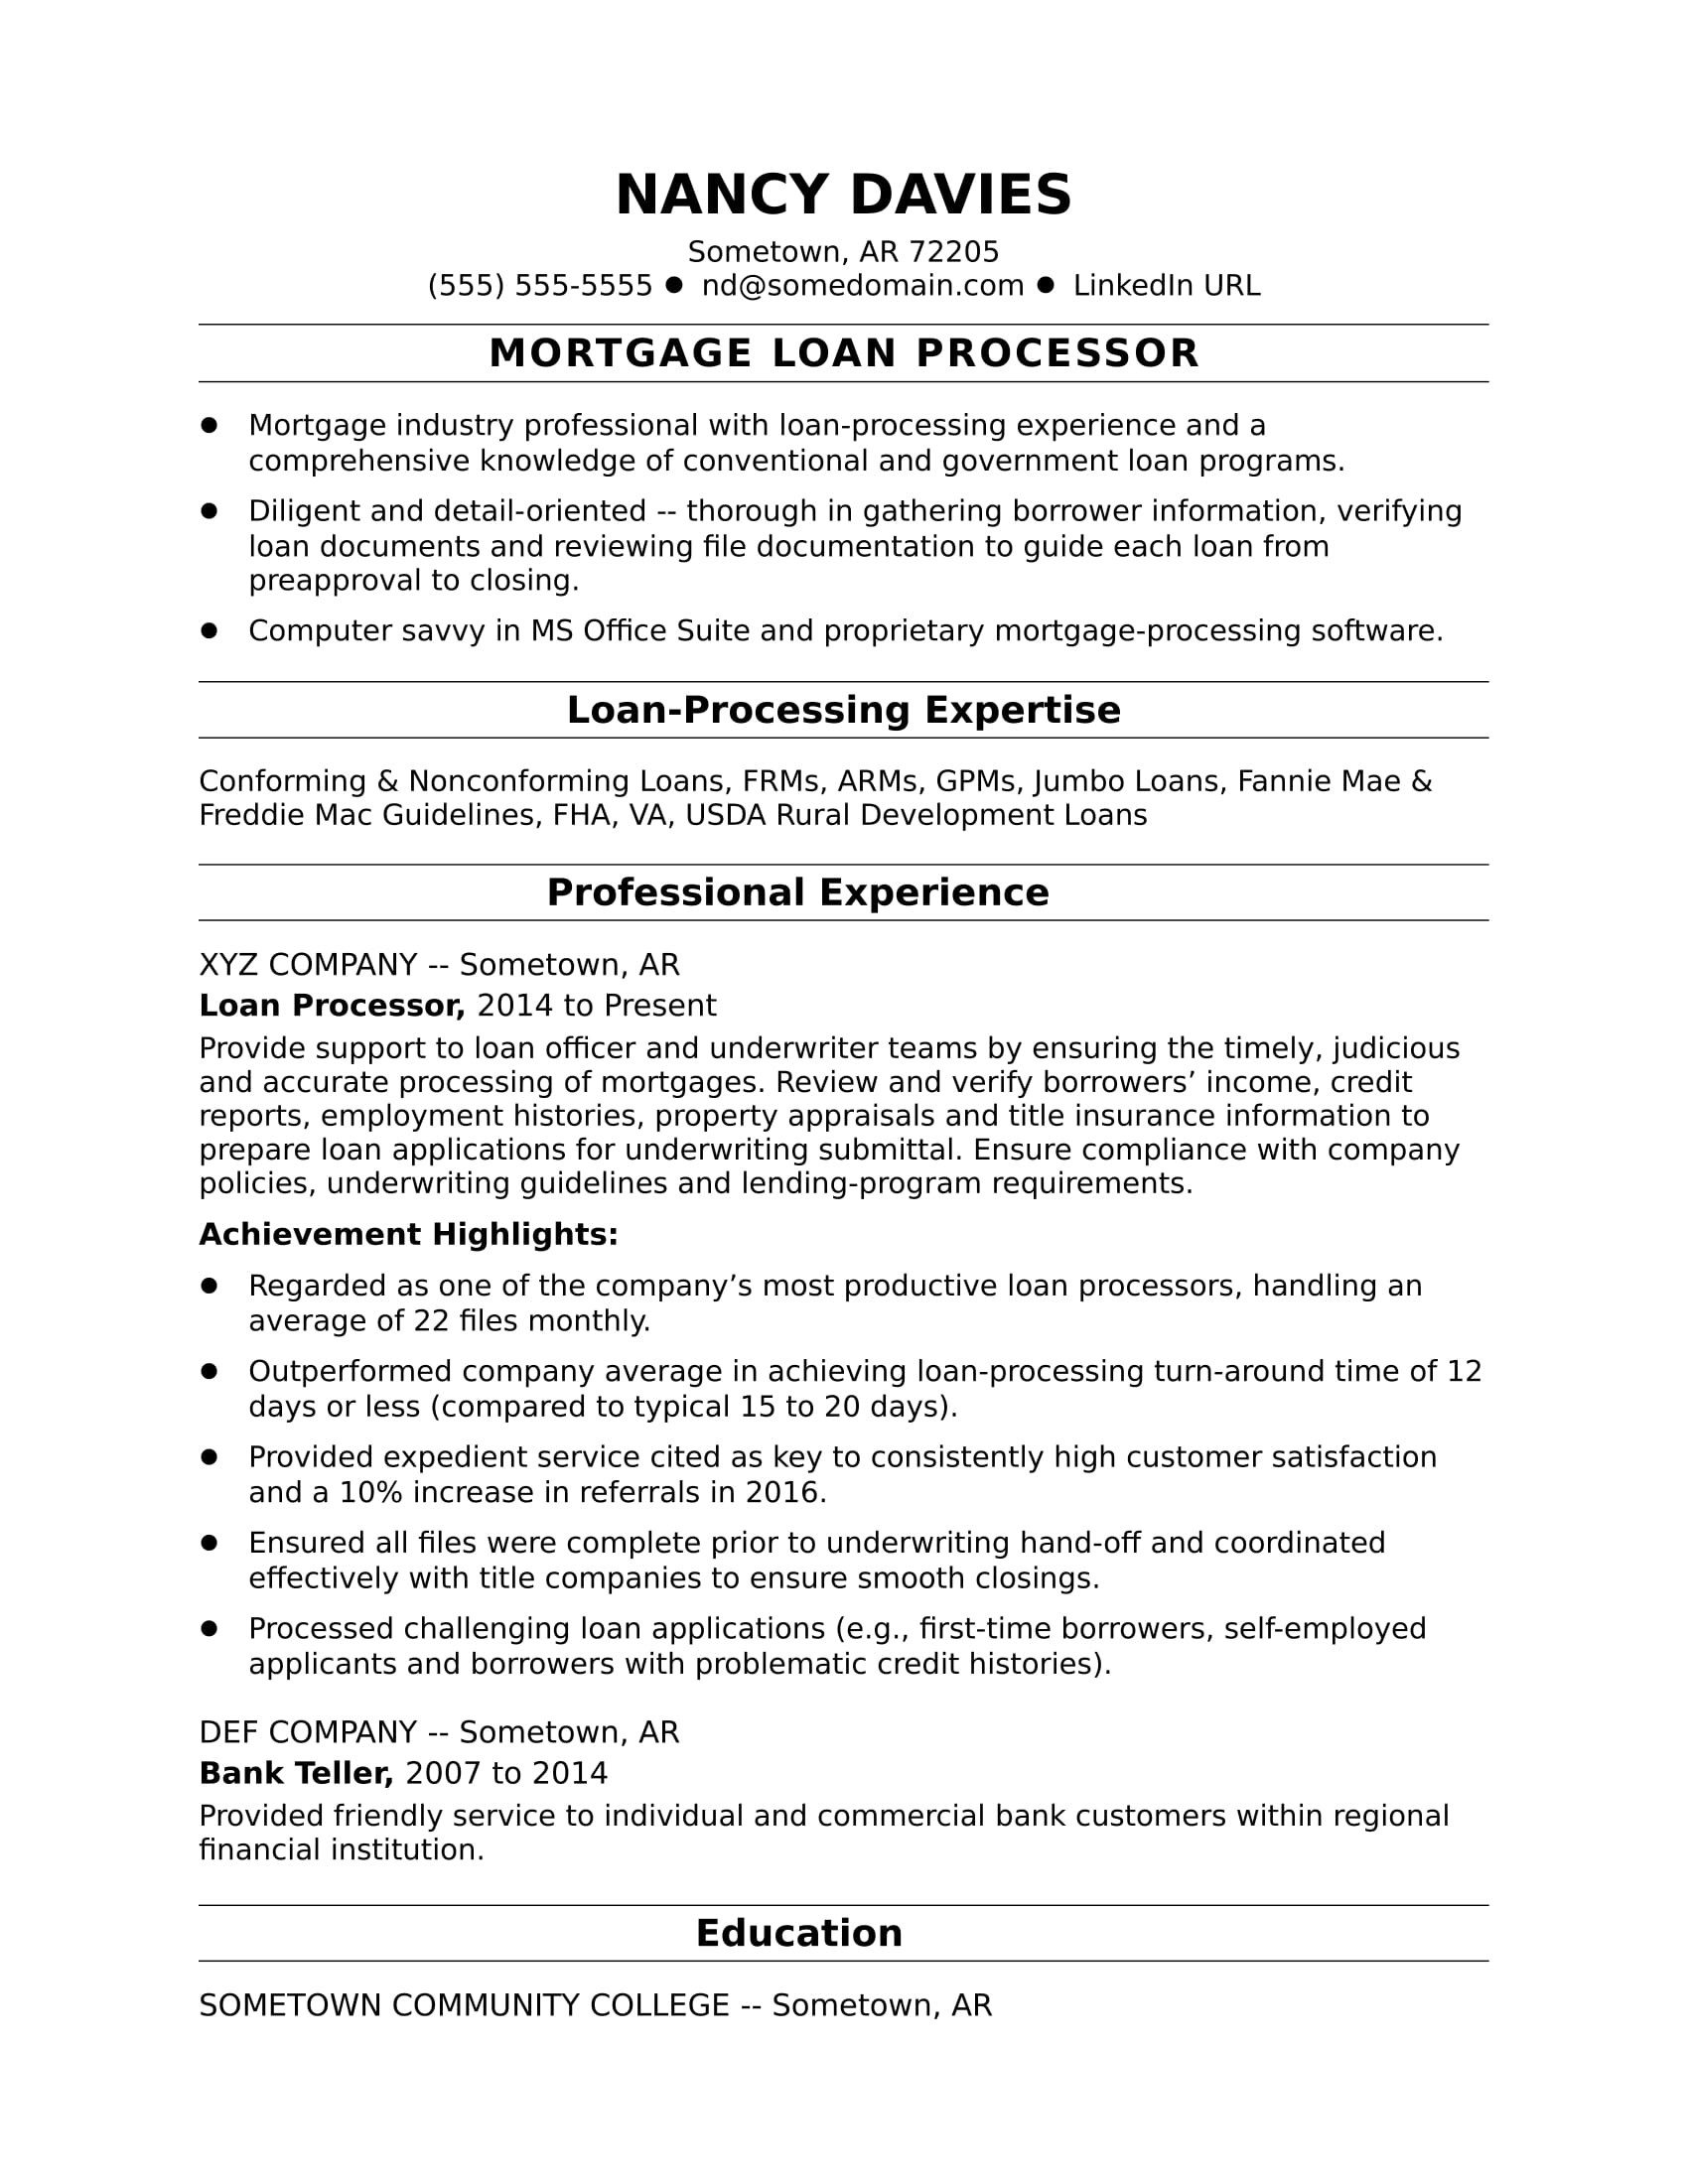 Vp Of Loan Operations Resume Sample Mortgage Loan Processor Resume Sample Monster.com